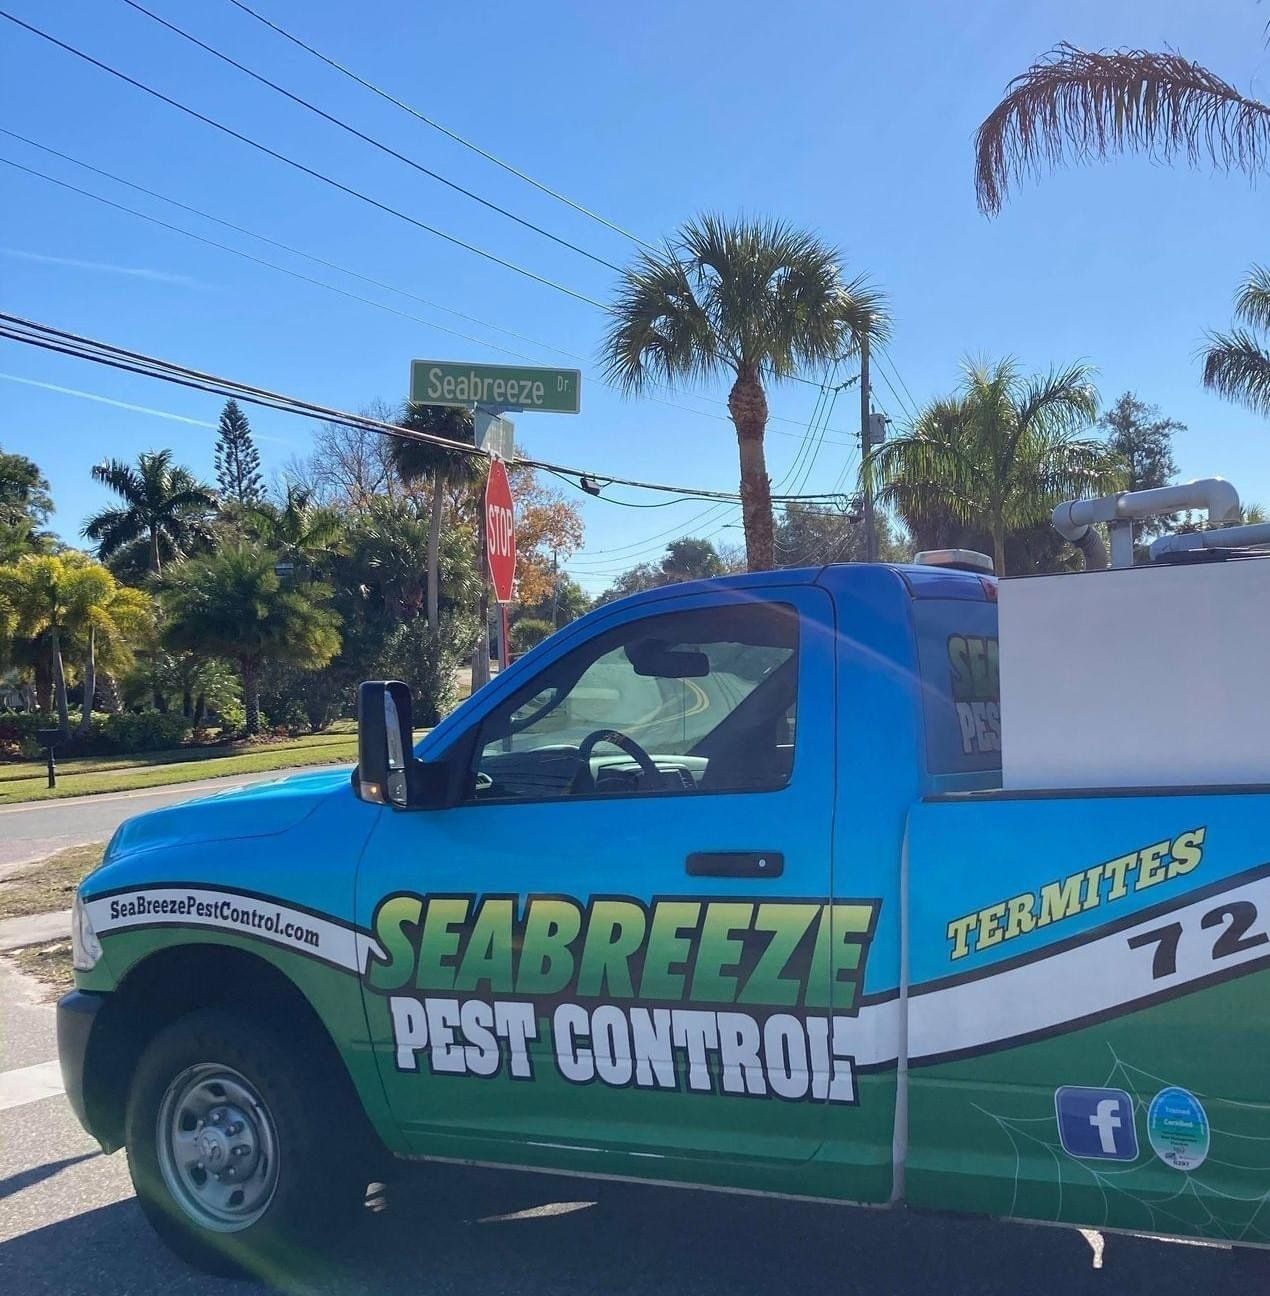 Seabreeze Pest Control Truck | Tarpon Springs, FL | Seabreeze Pest Control